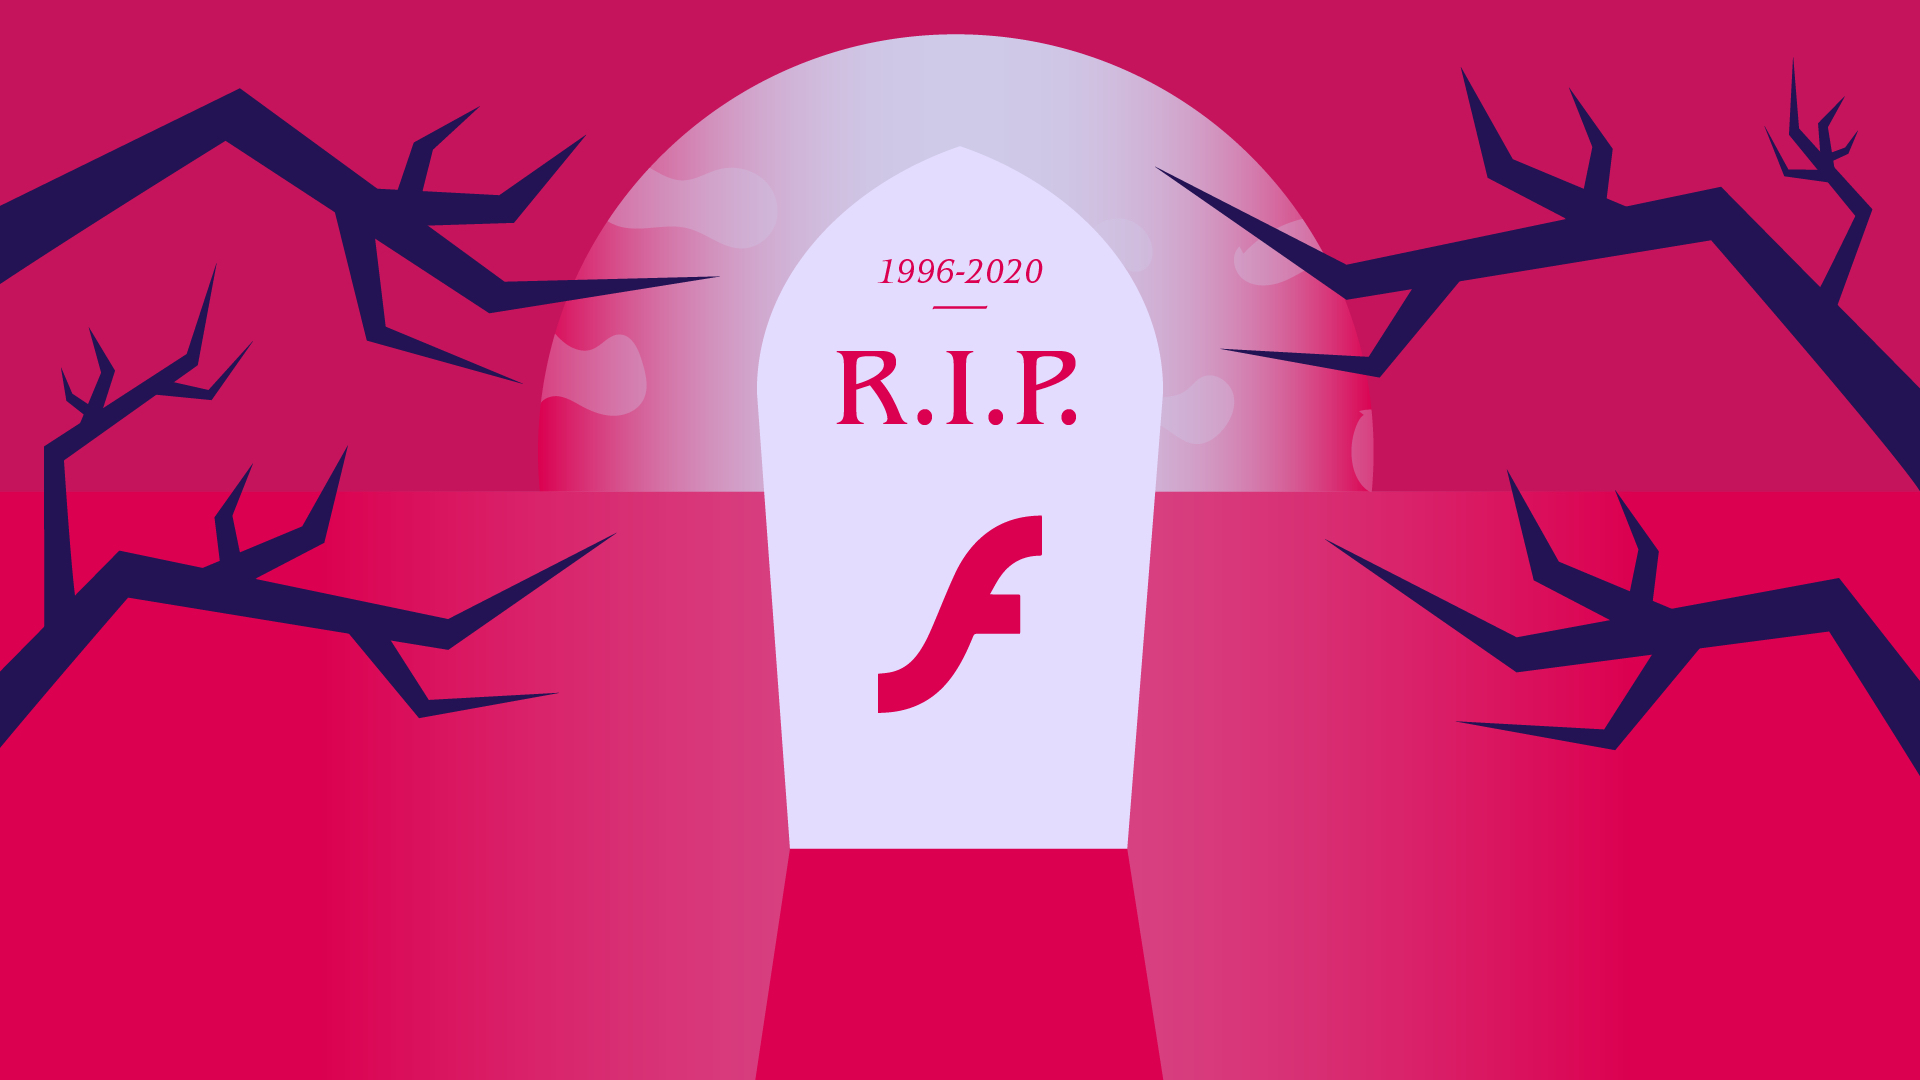 We say goodbye to Adobe Flash